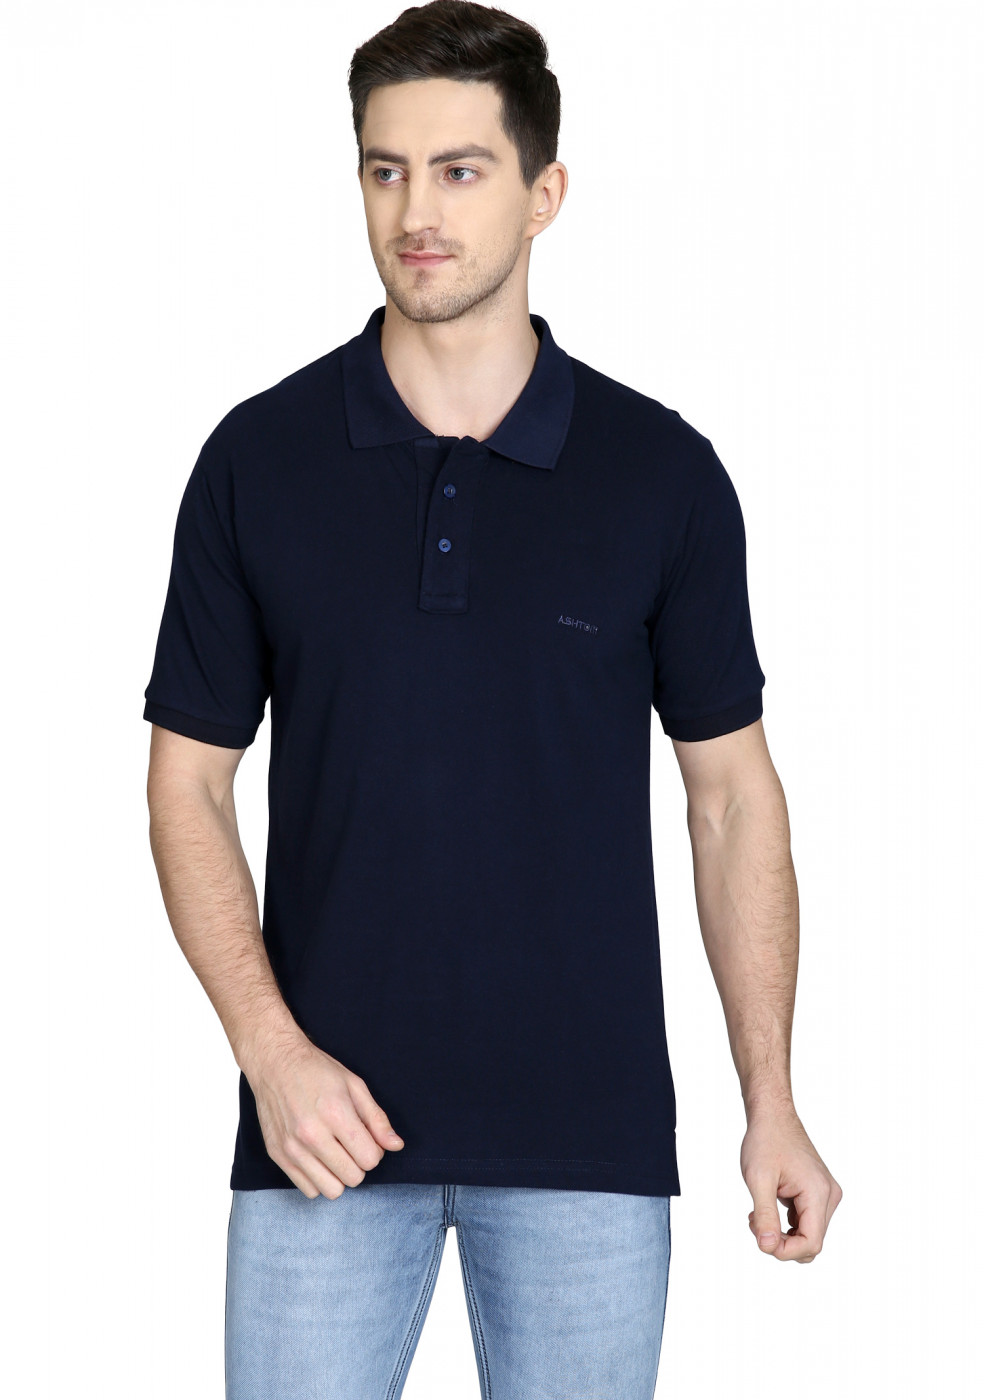 Blue Polo T Shirt For Men